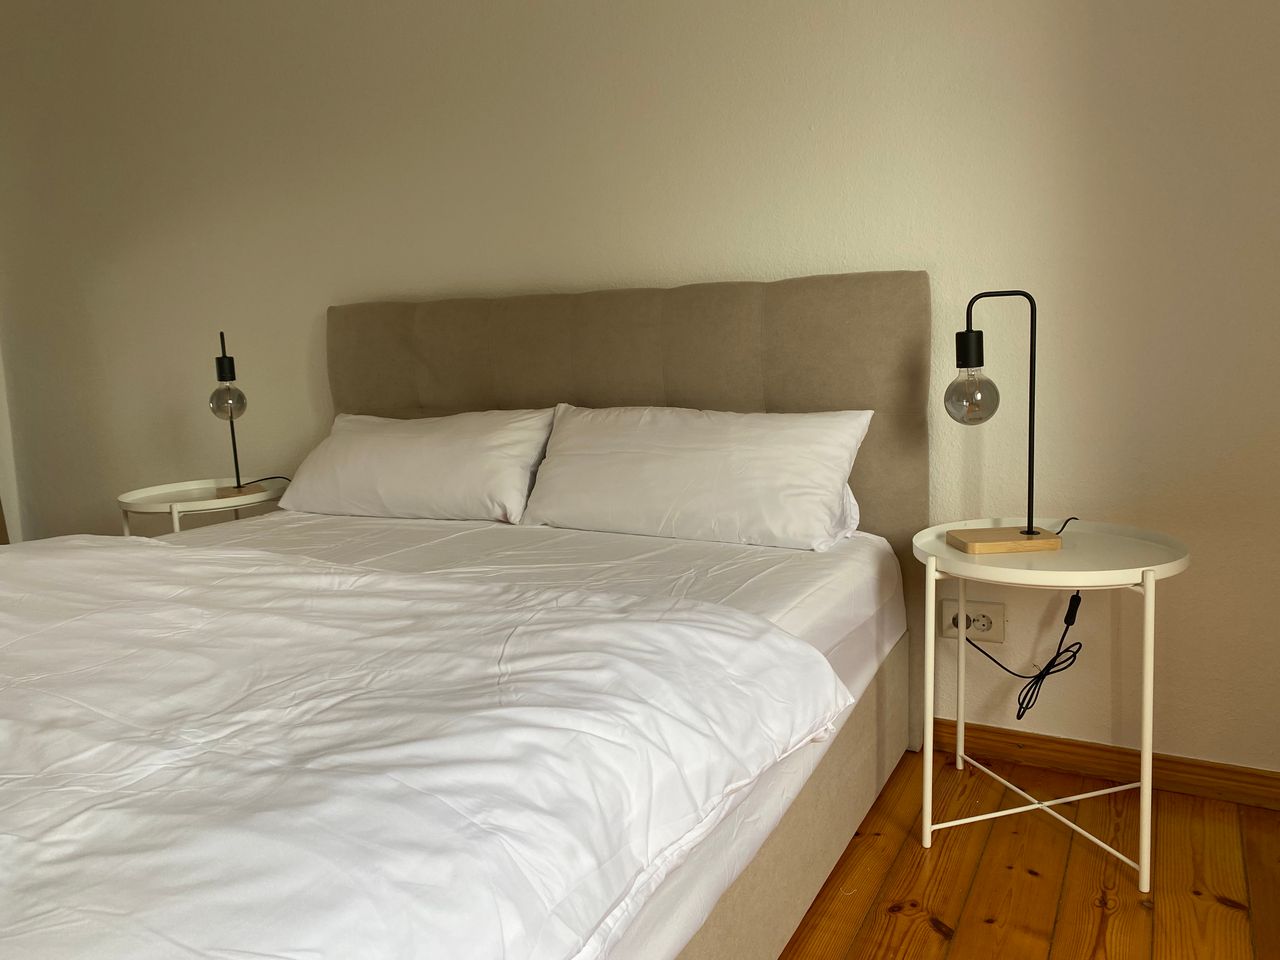 Brand new furnished 3-bedroom apartment in Kaulsdorf